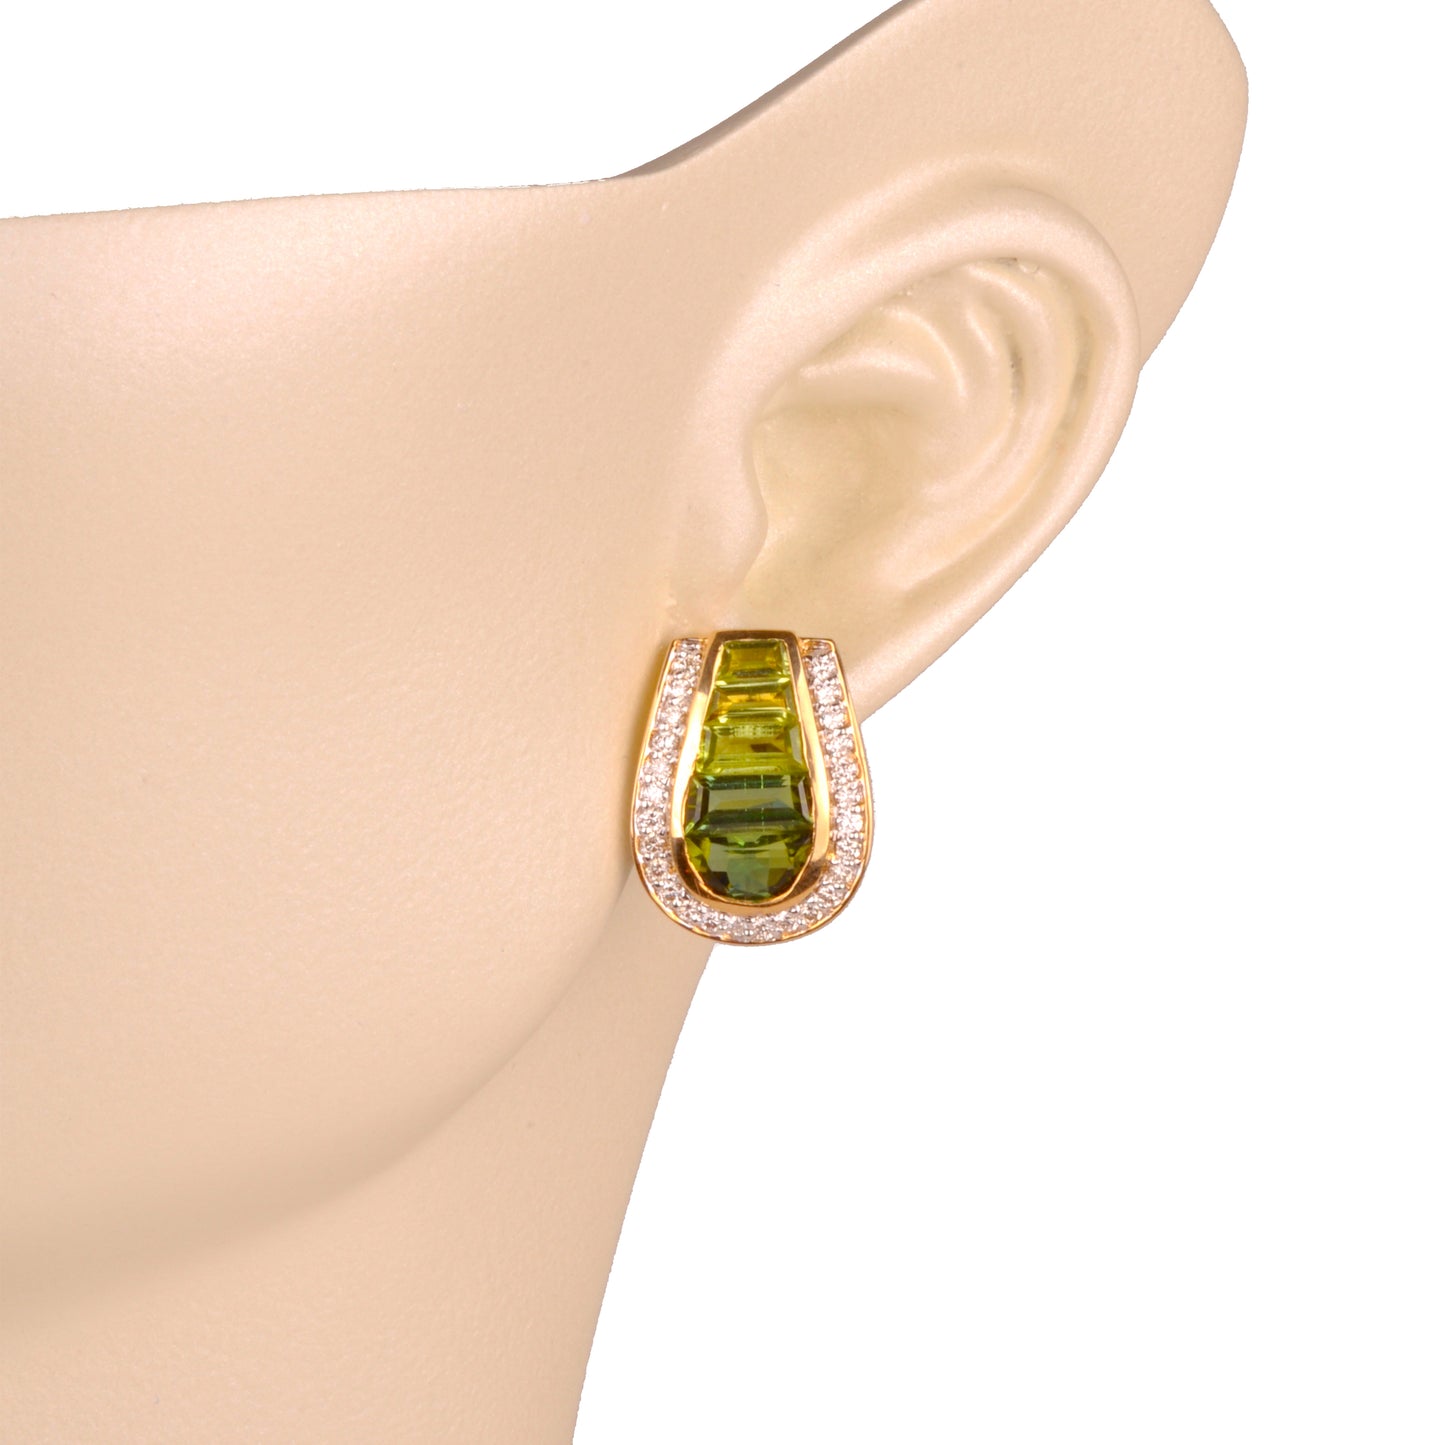 18K Gold Green Tourmaline Peridot Diamond Studs Earrings - Vaibhav Dhadda Jewelry